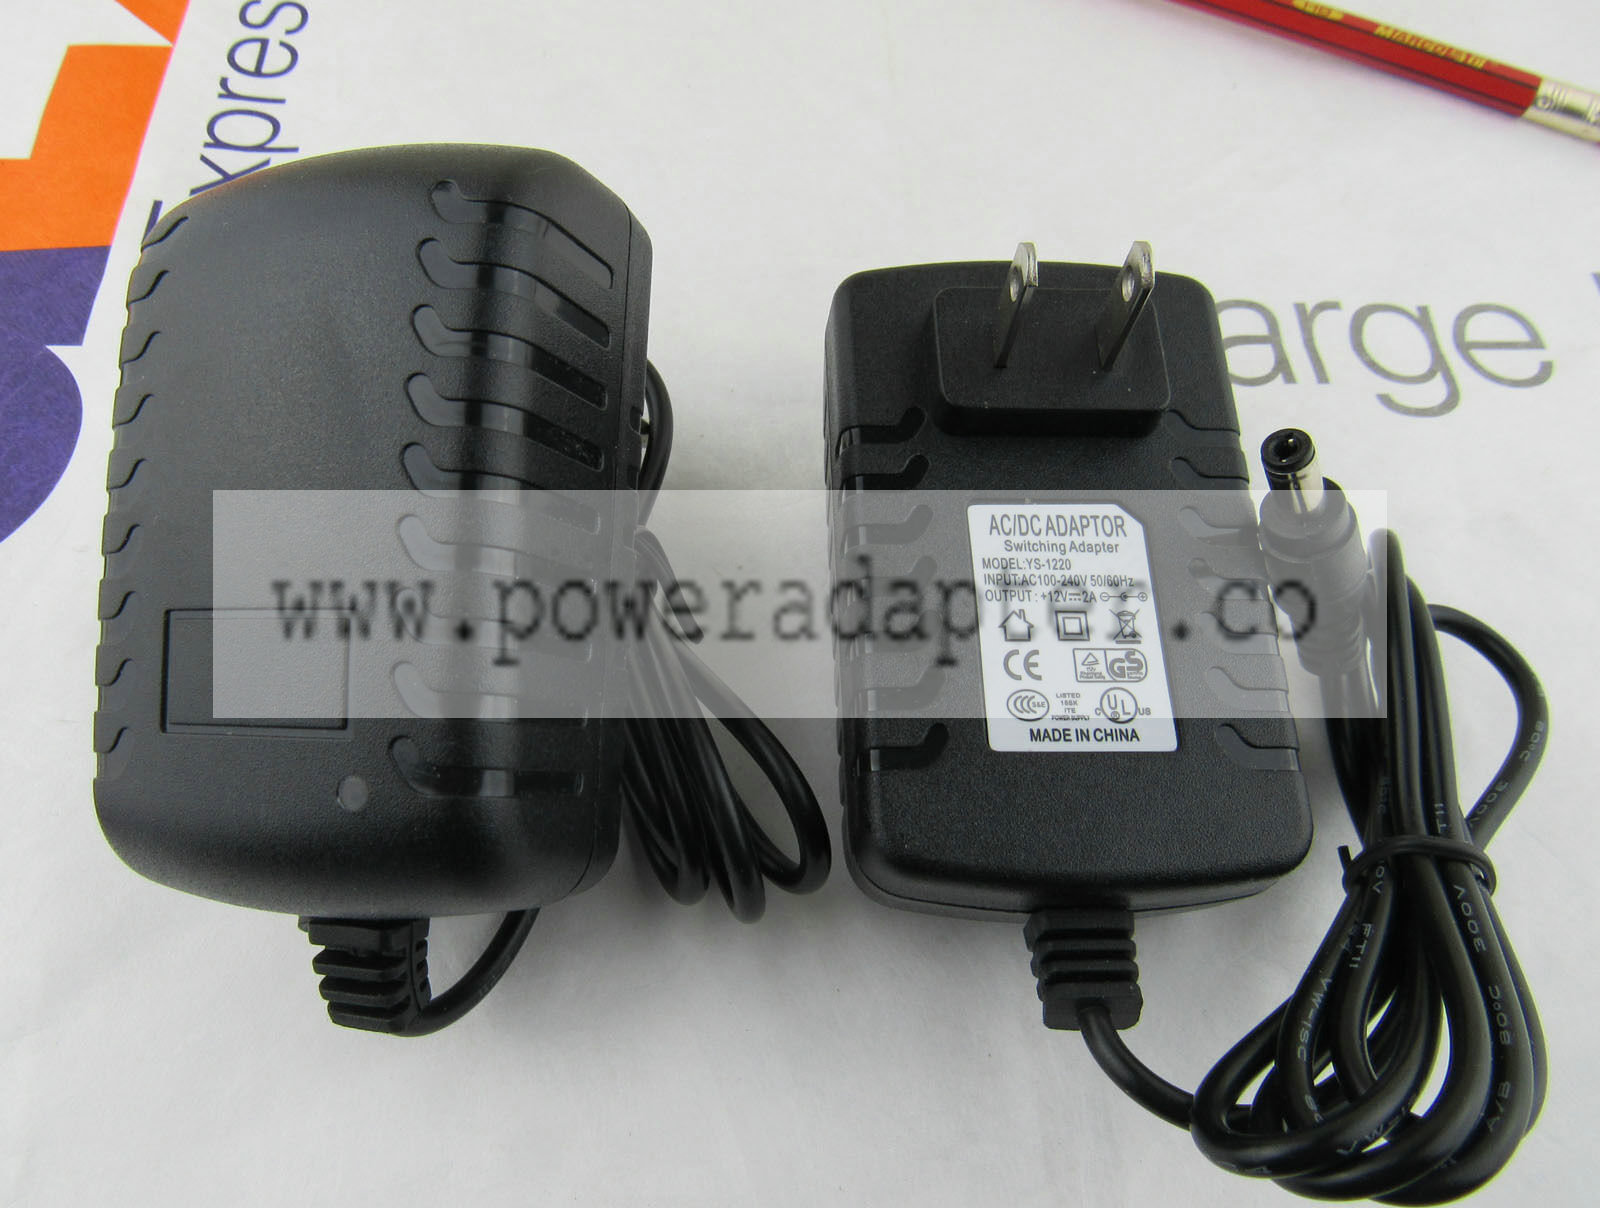 AC Adapter for Motorola 12V 2A SB5101 SB5100 SB6120 Cable Modem Power Supply Type: 12V 2A Brand: Jujint MPN: 12V2A